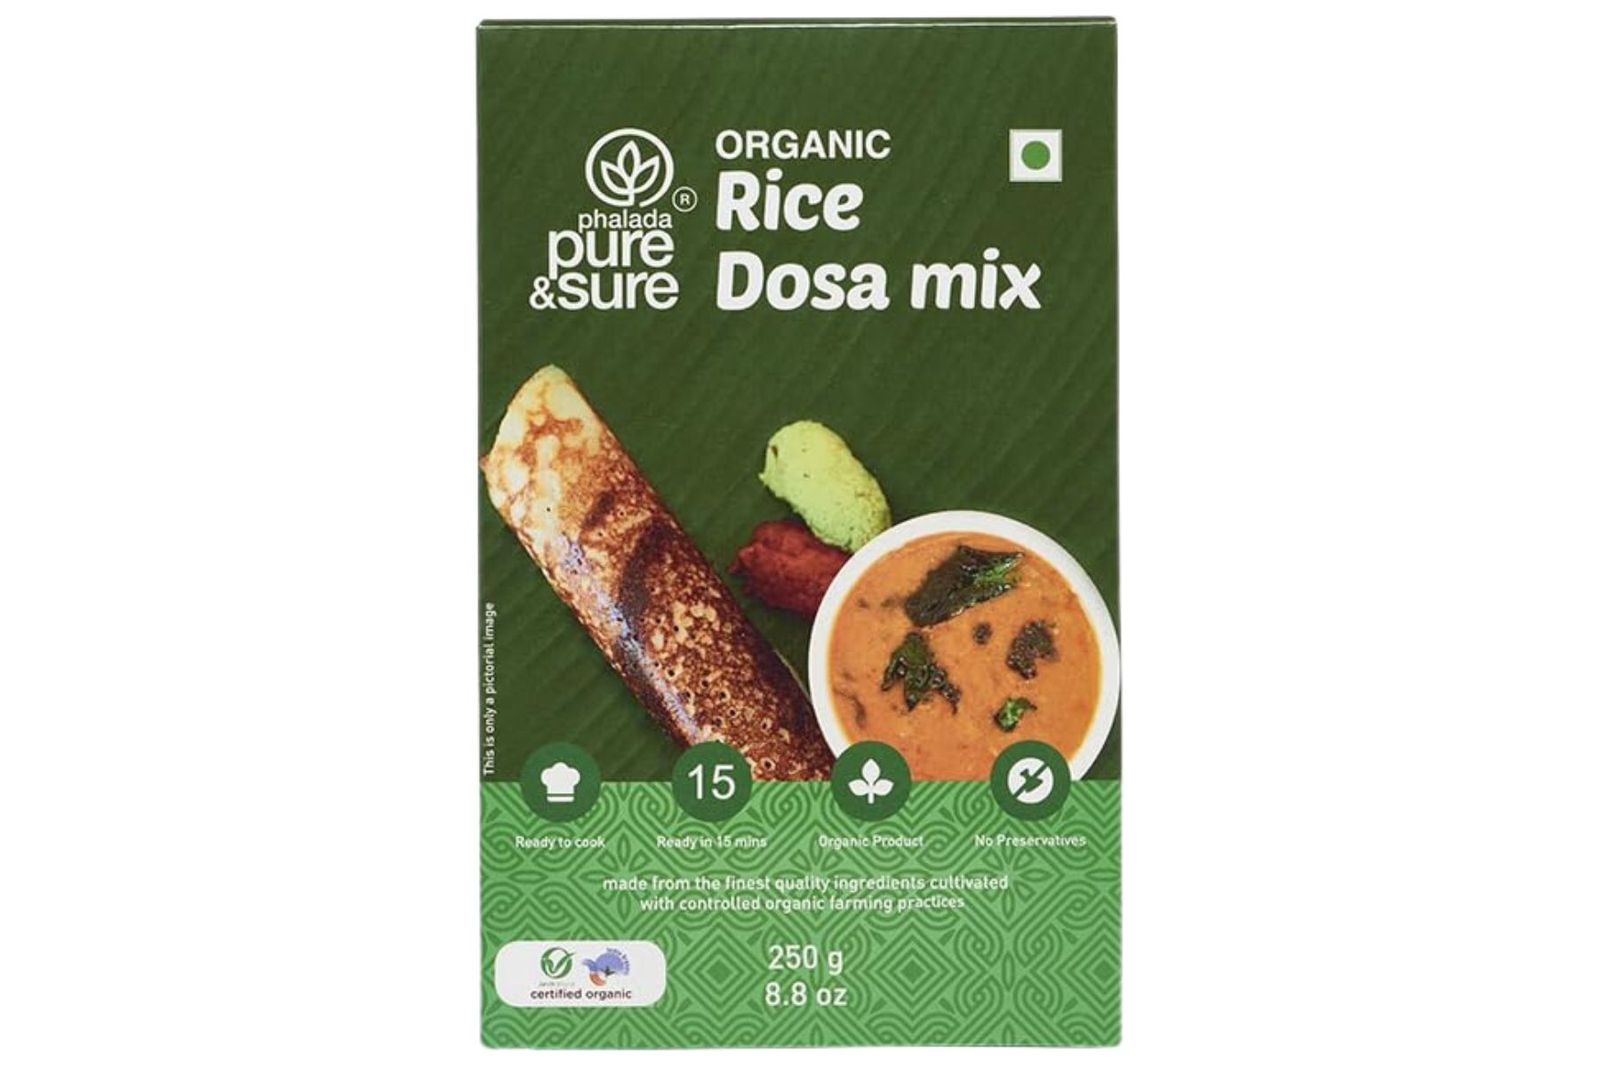 Pure & Sure Organics Rice Dosa Mix